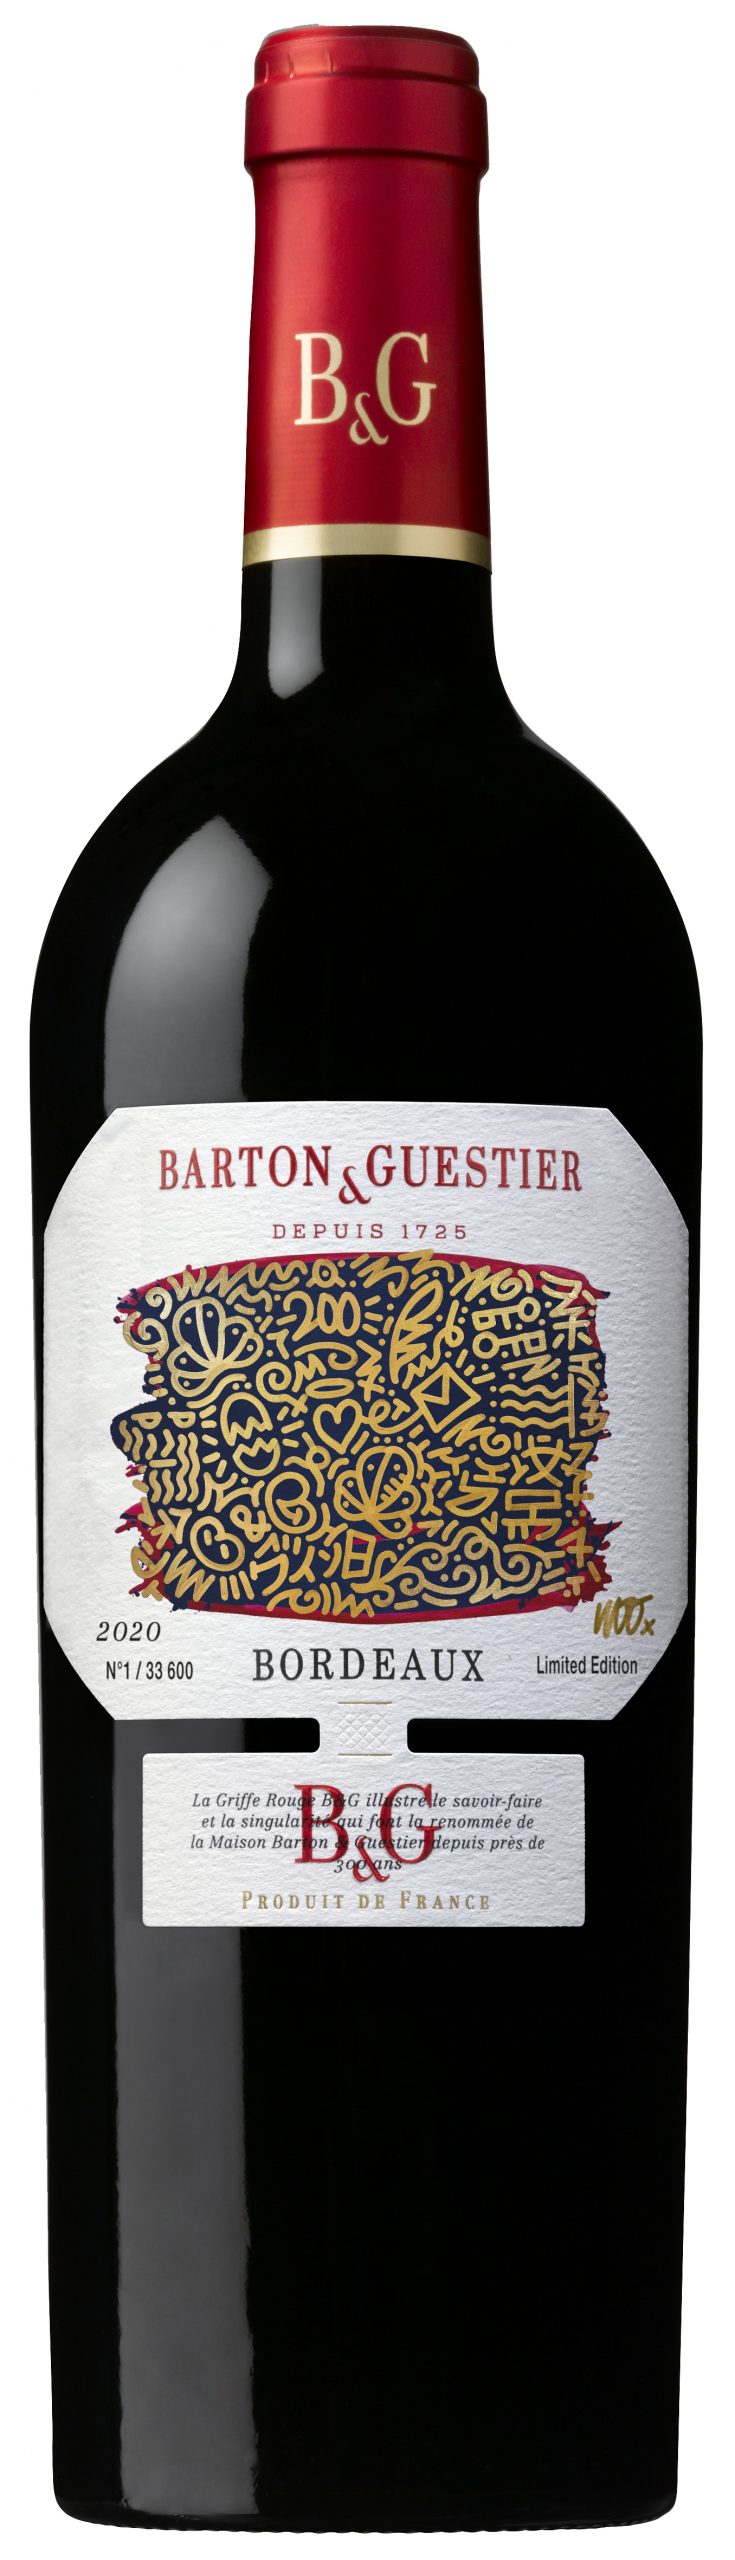 Barton & Guestier launches limited edition artwork for Bordeaux wine bottles